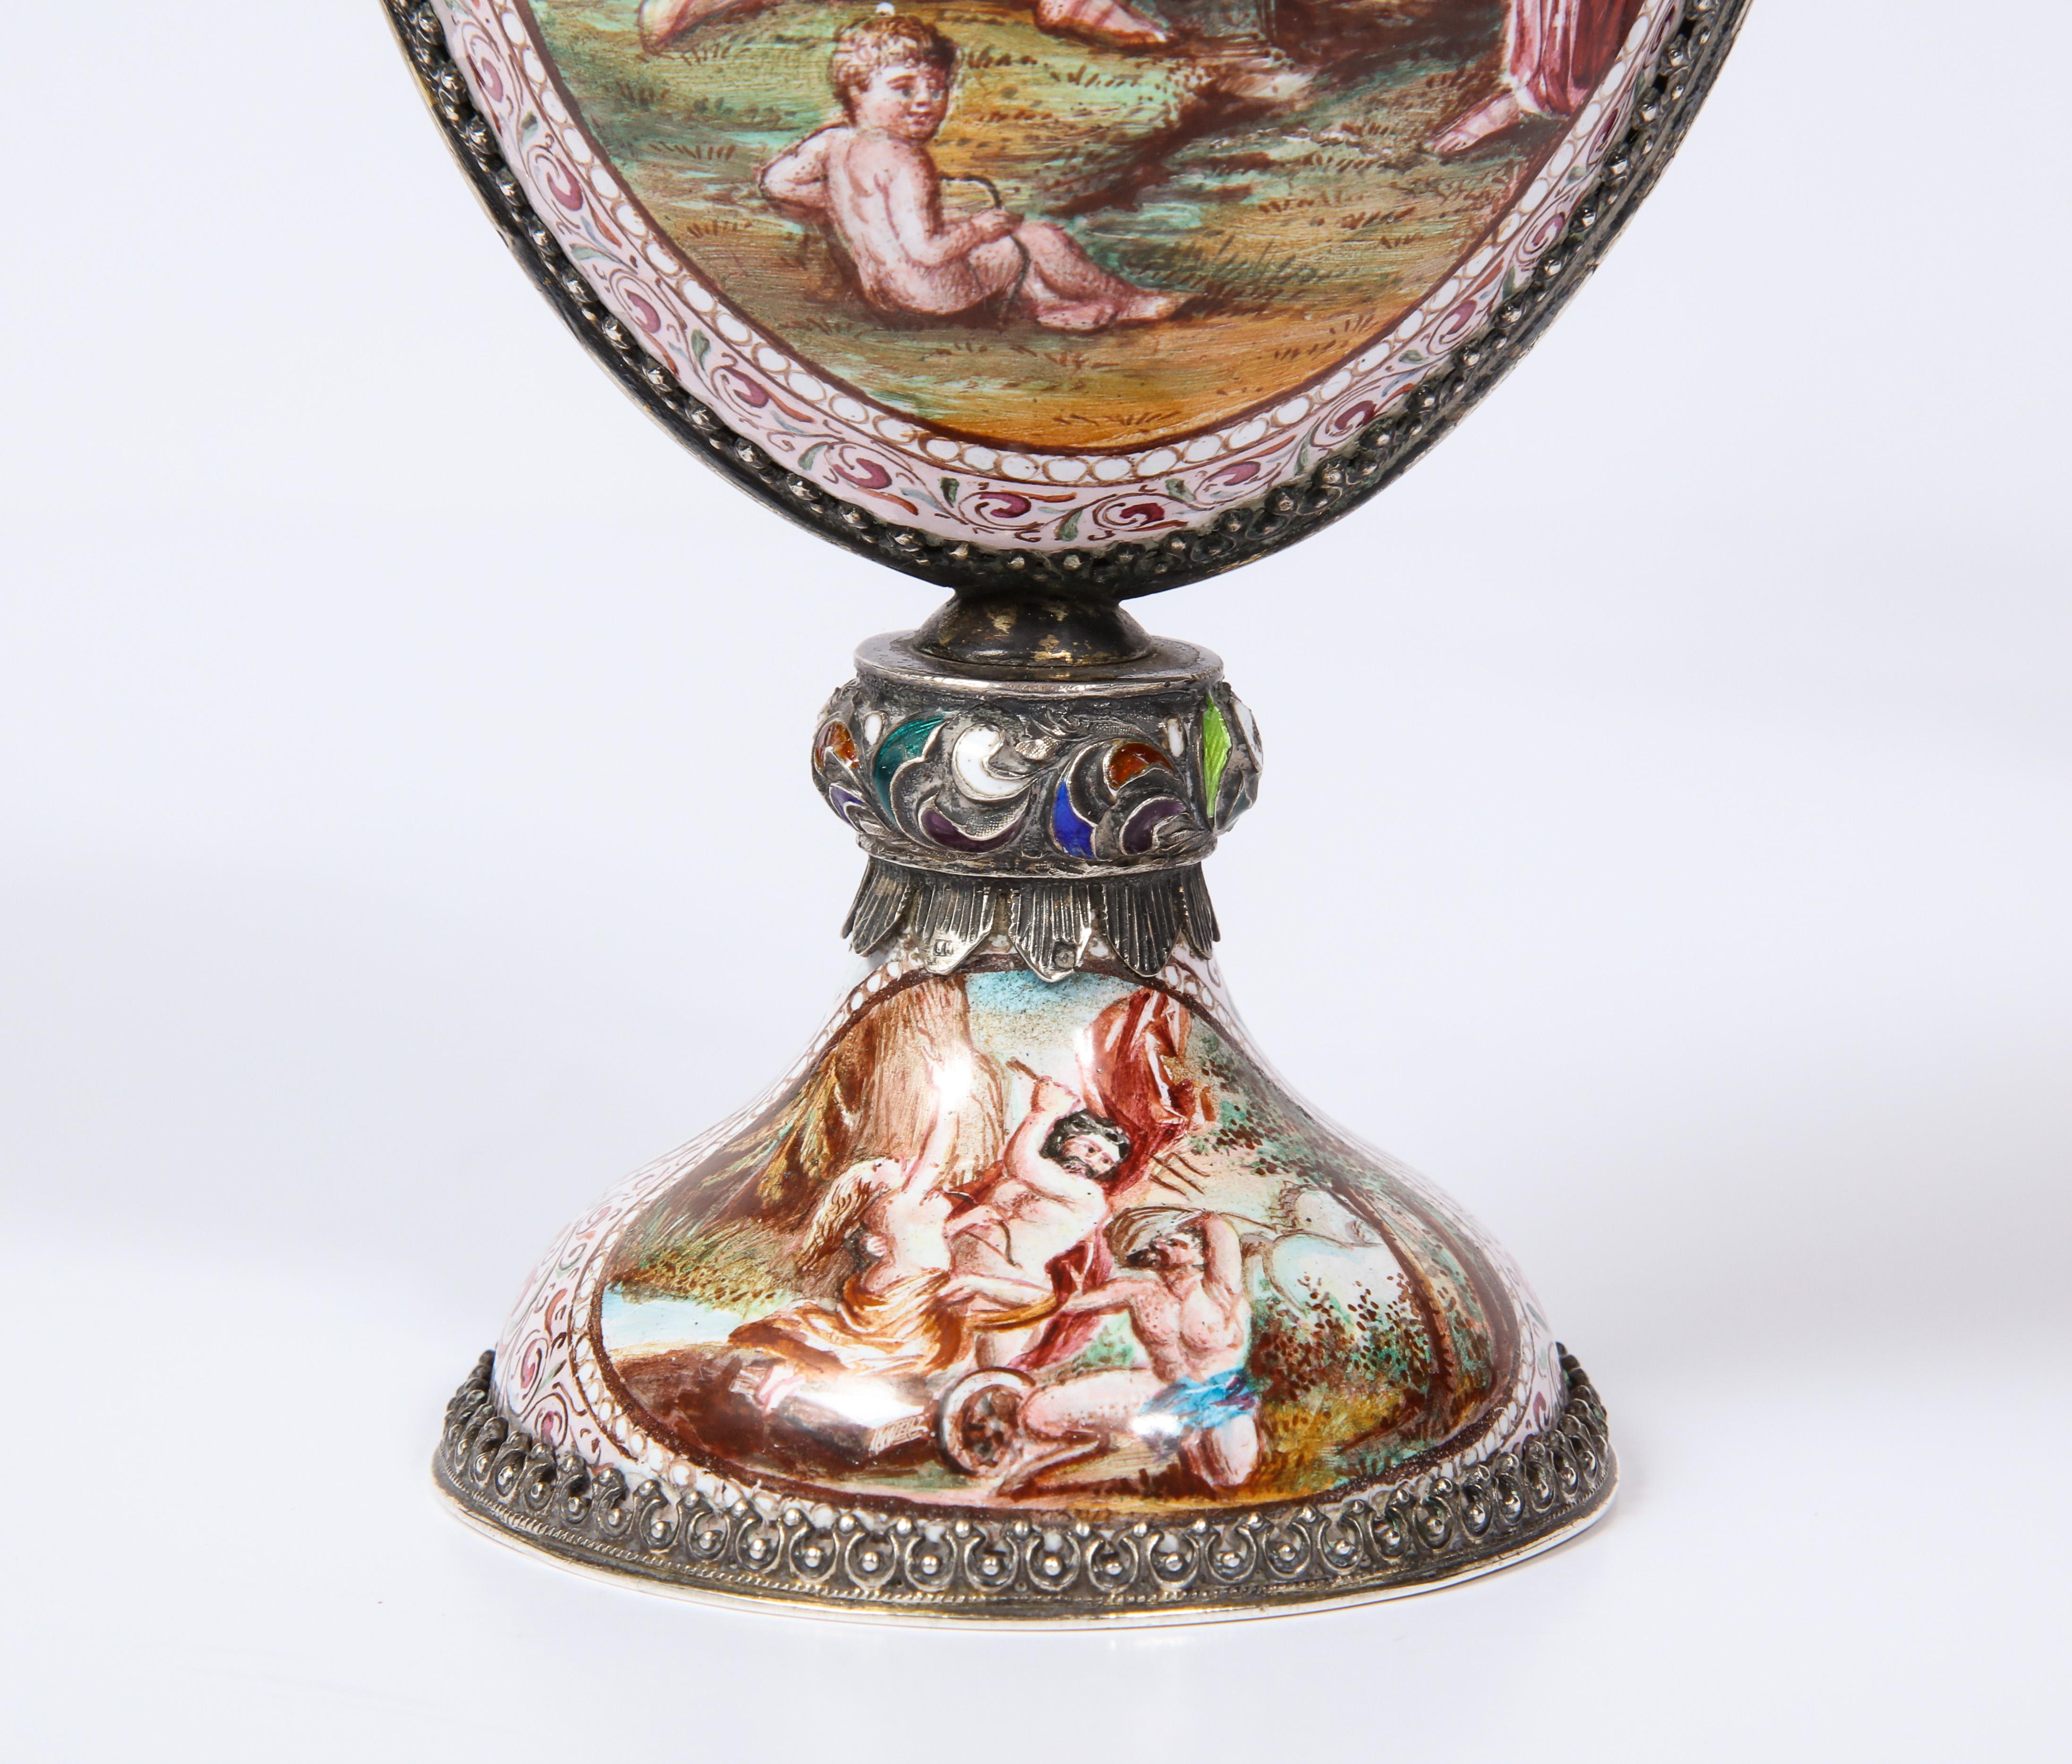 Pr. Viennese Enamel on Silver Vases with Mythological Scenes Signed Hallmarks HB 7